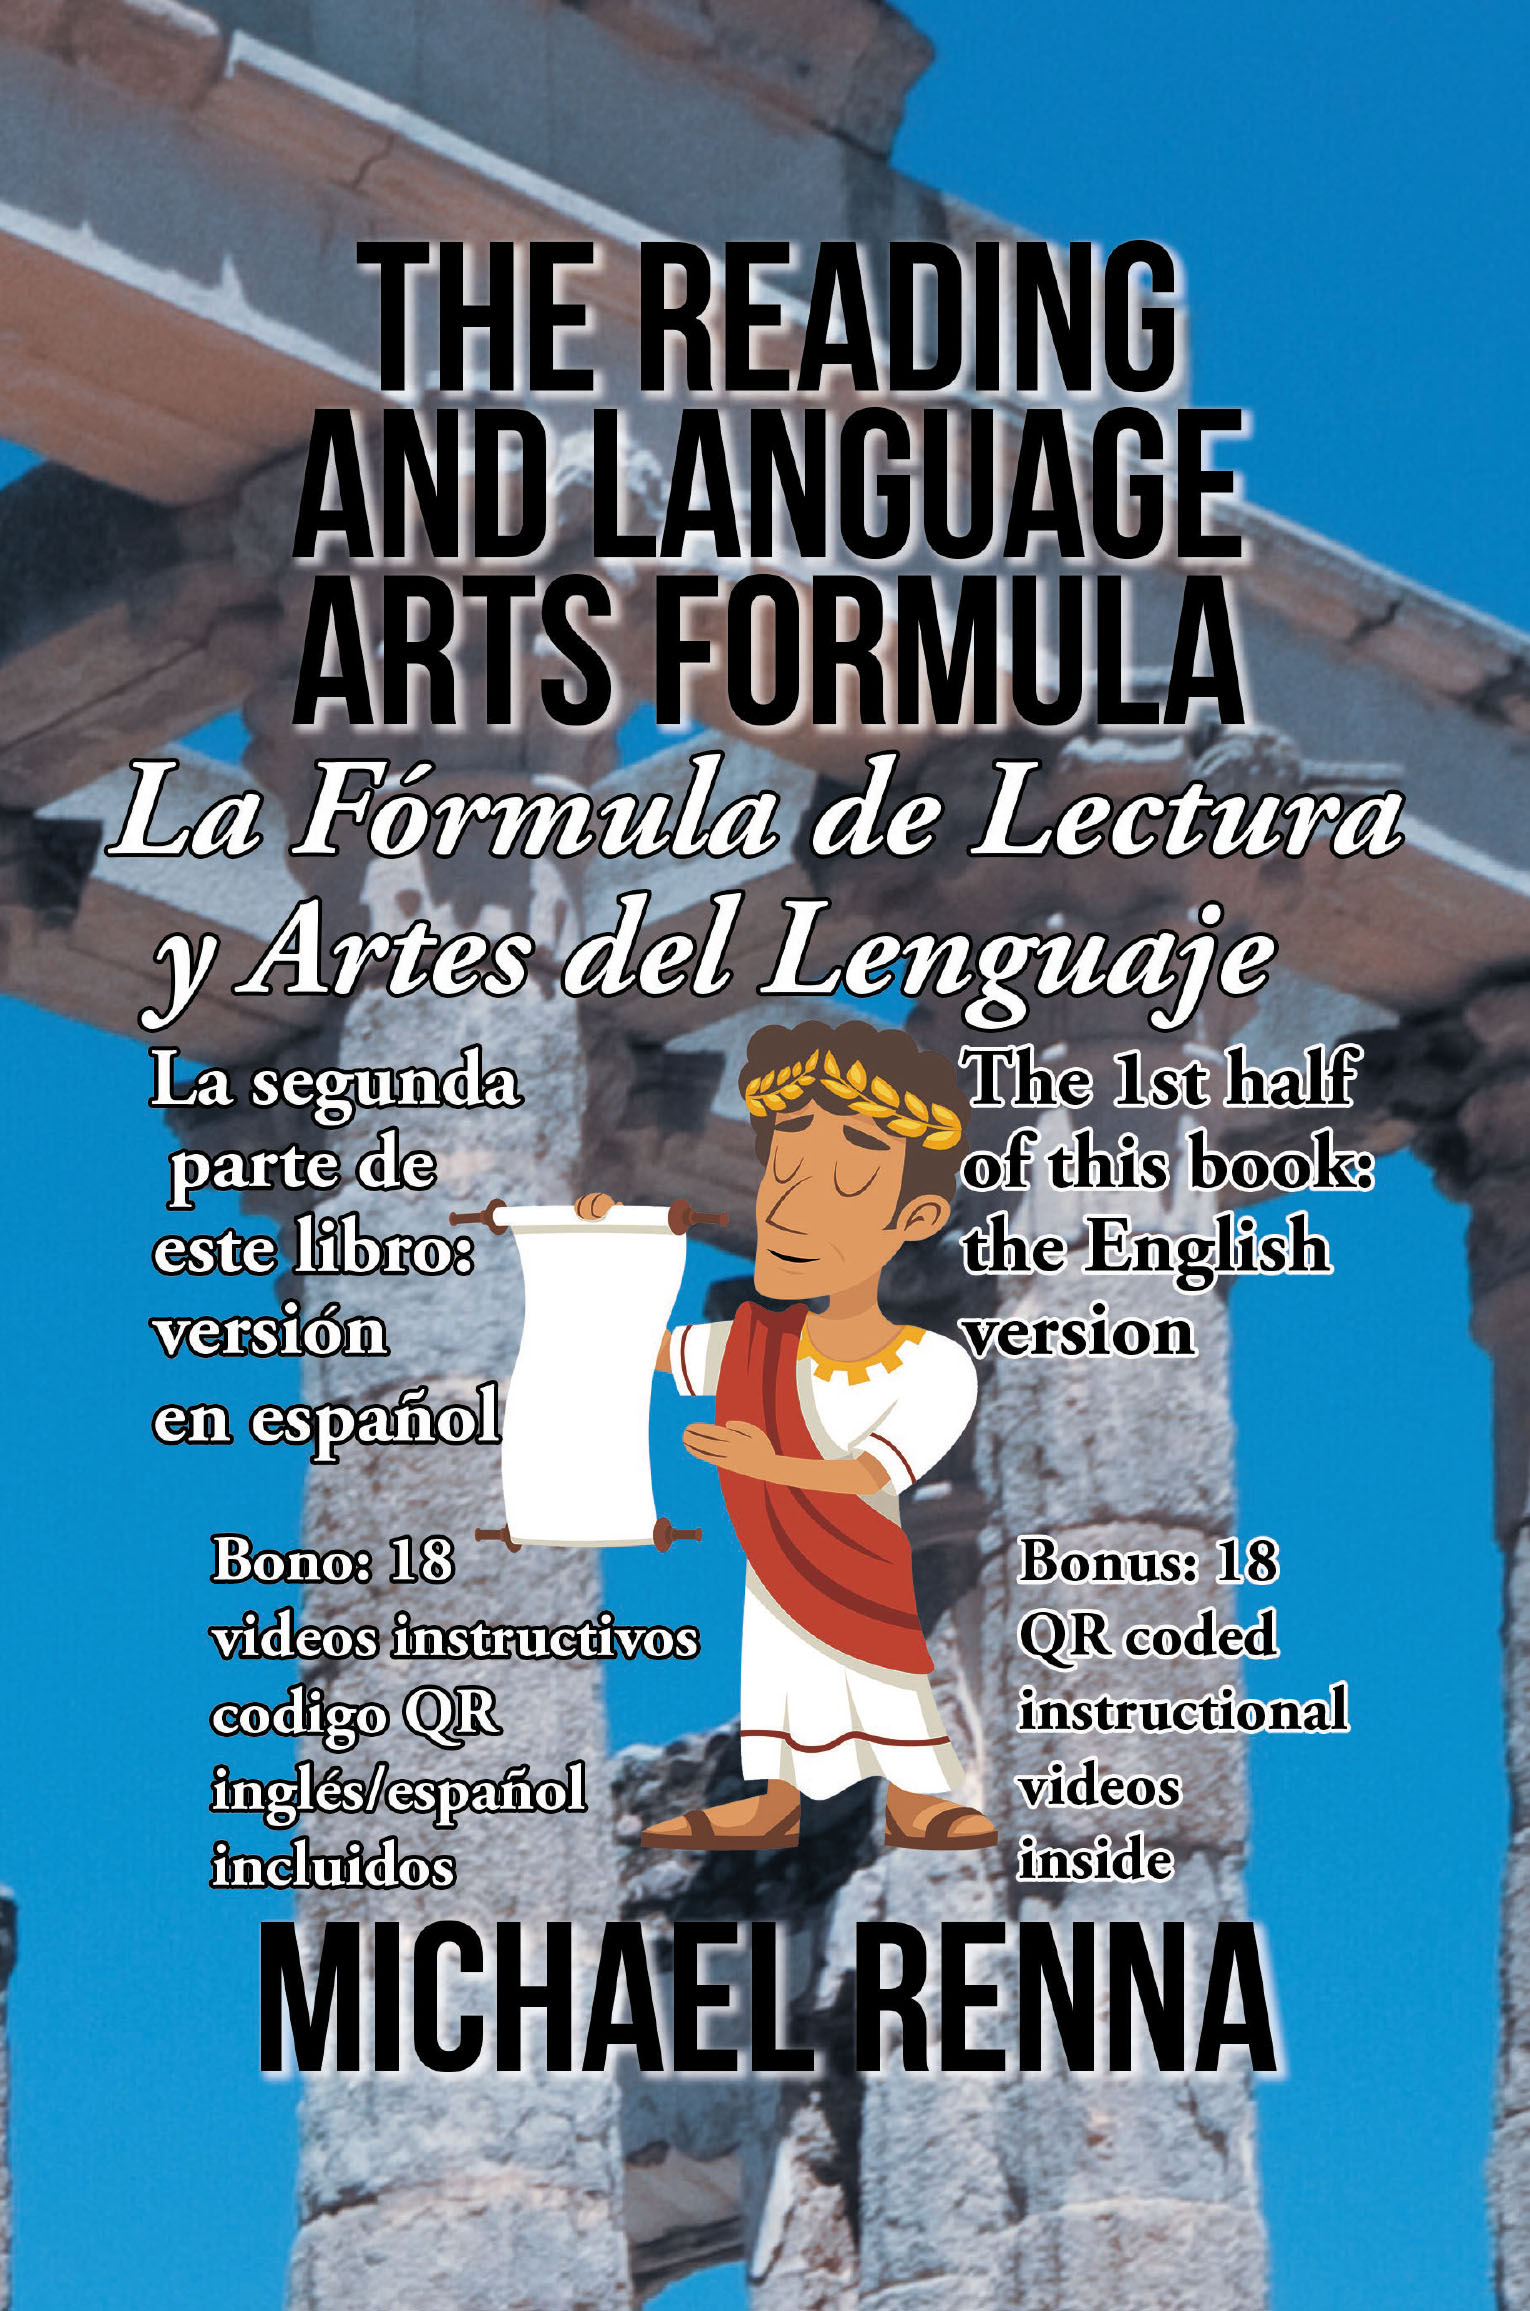 The Reading and Language Arts Formula: PQRK3SEC6 Formula Cover Image